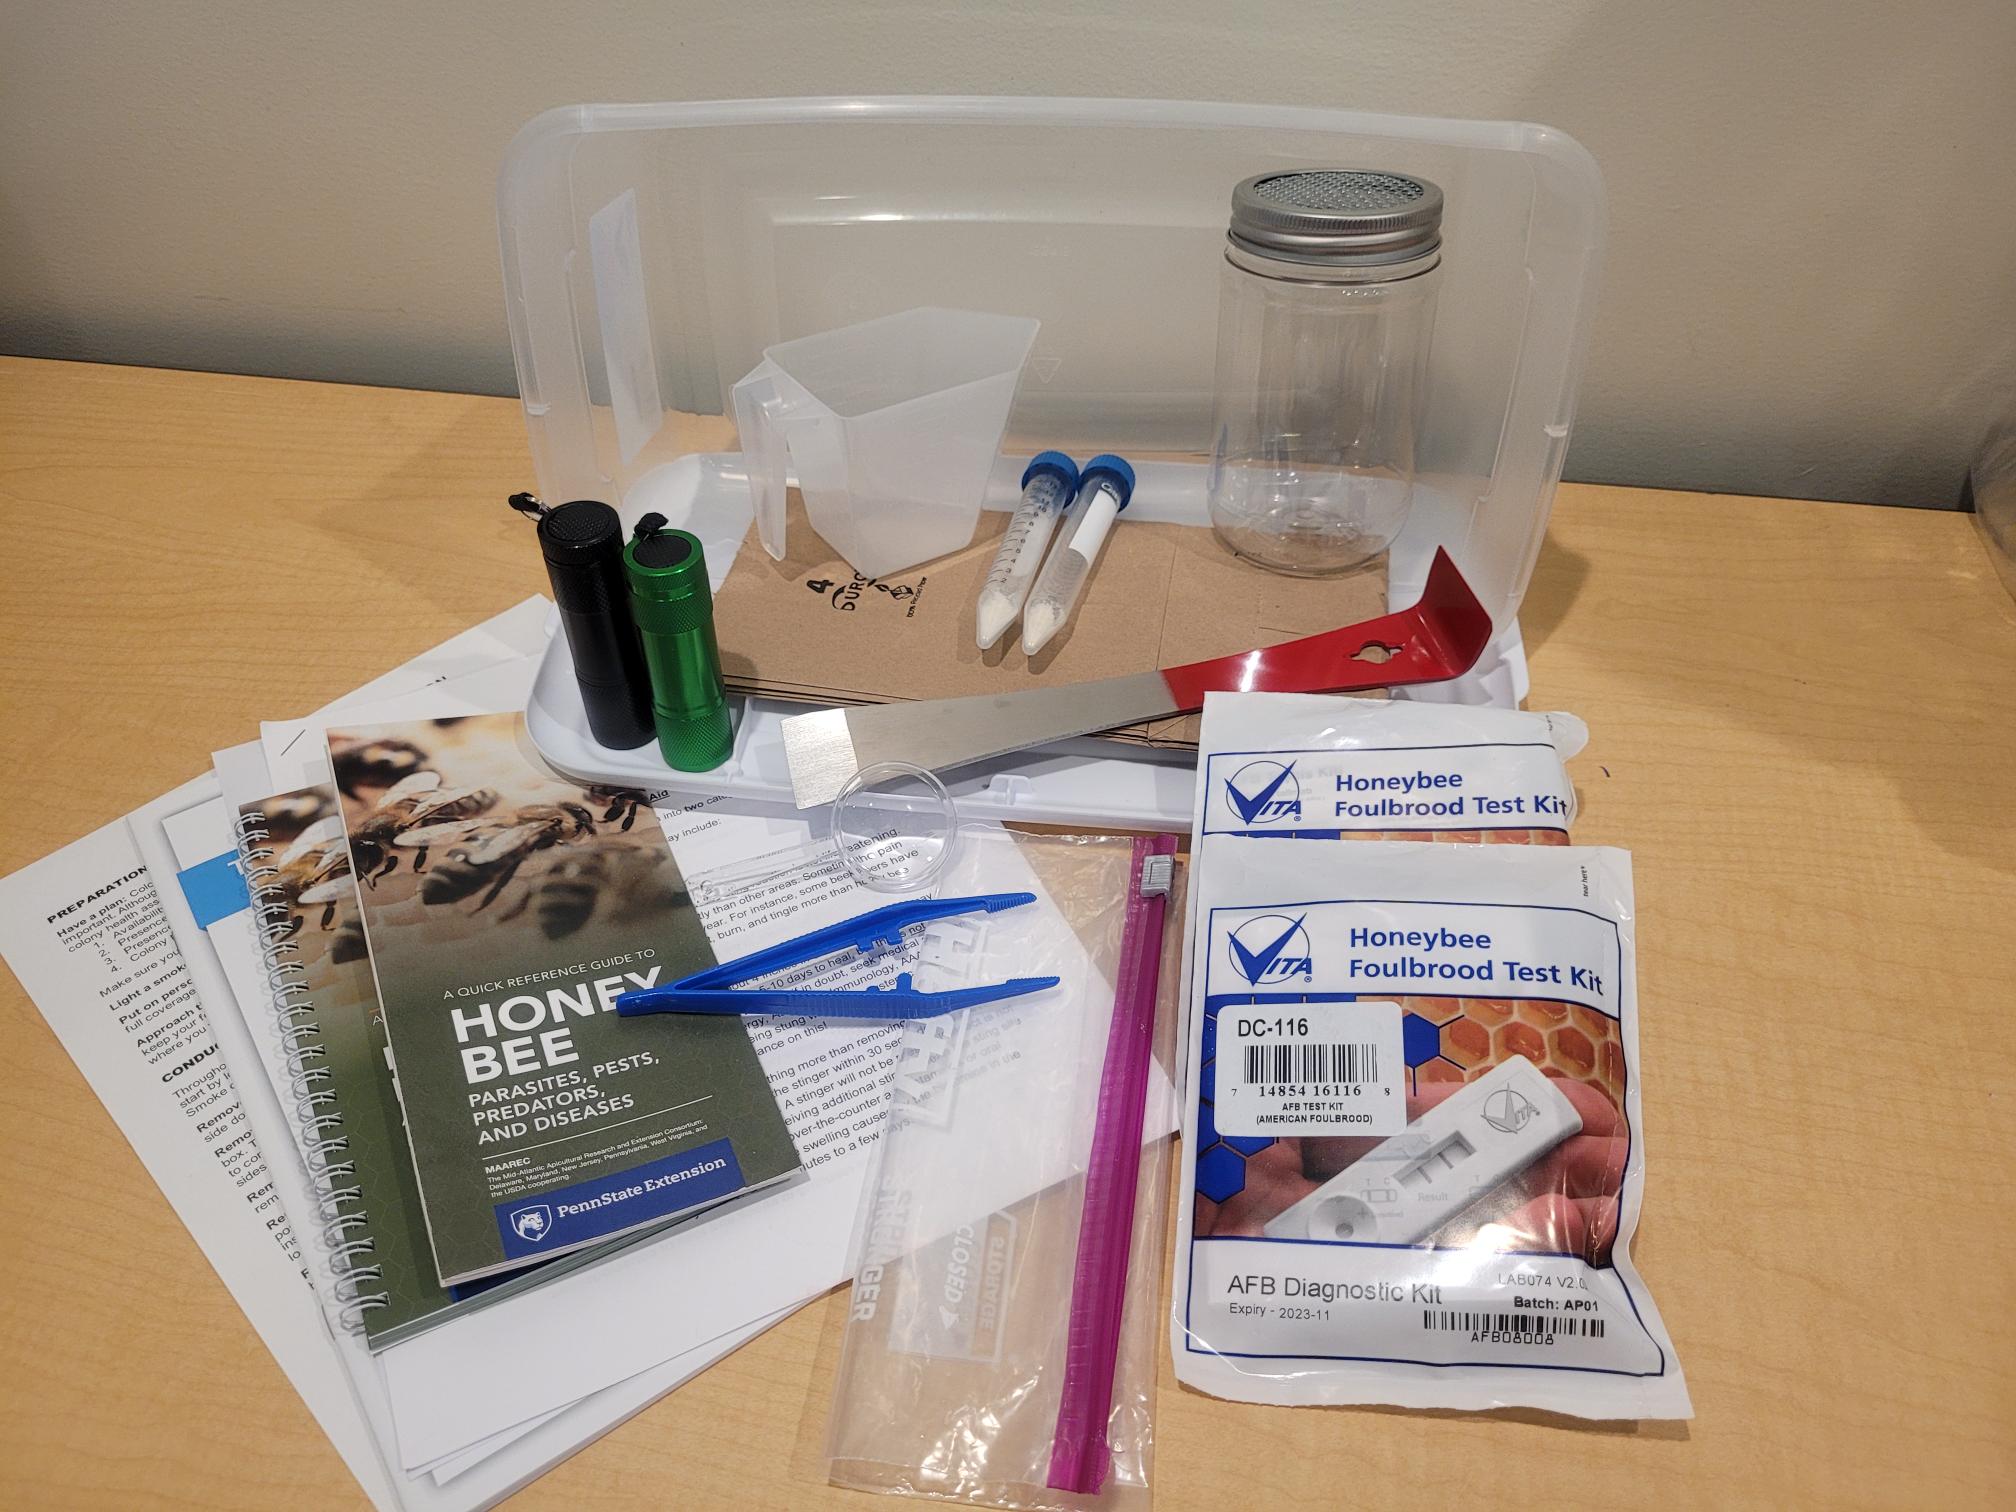 Diagnostic kit items